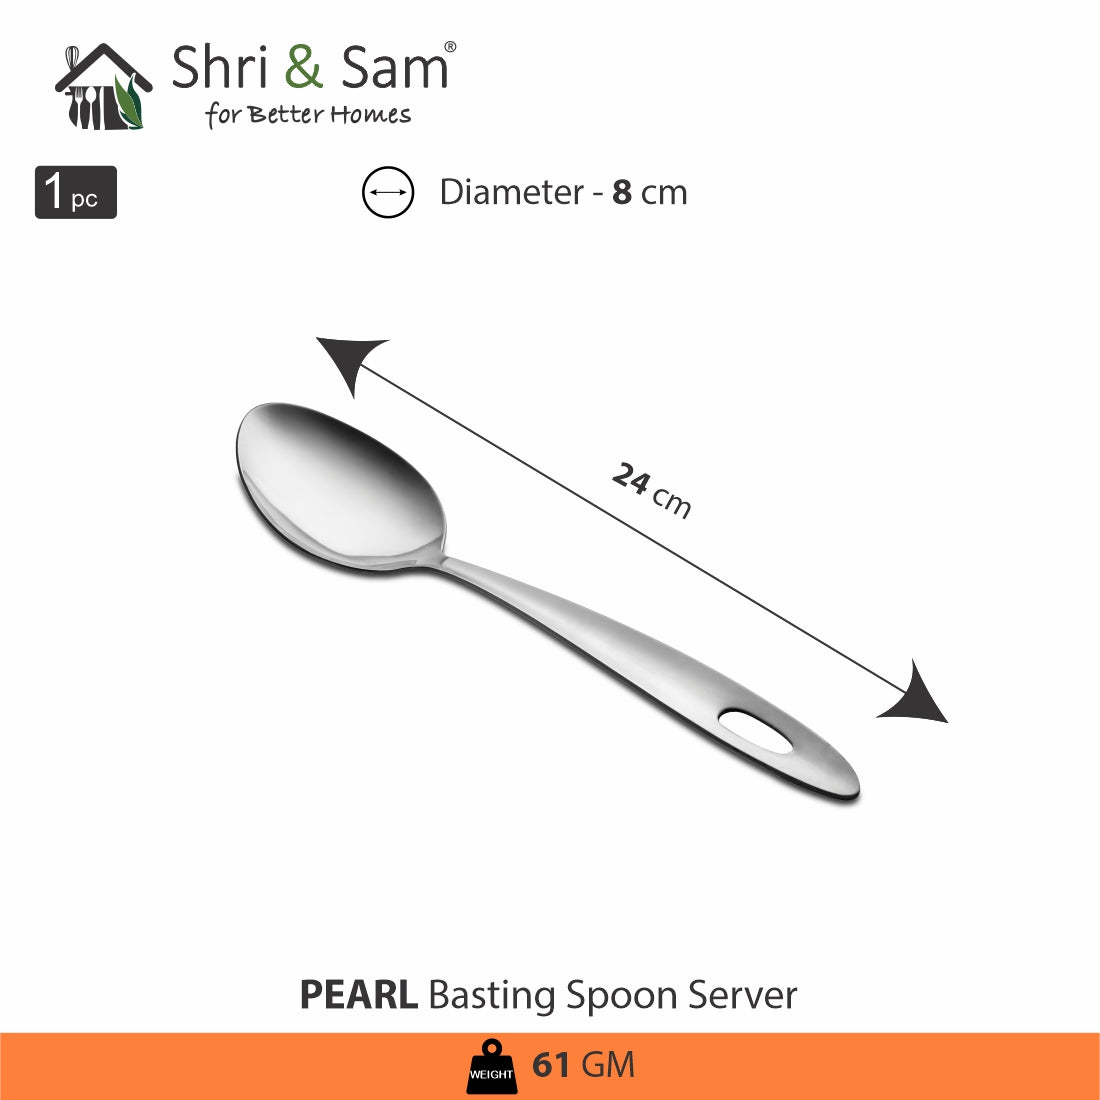 Stainless Steel Basting Spoon Server Pearl